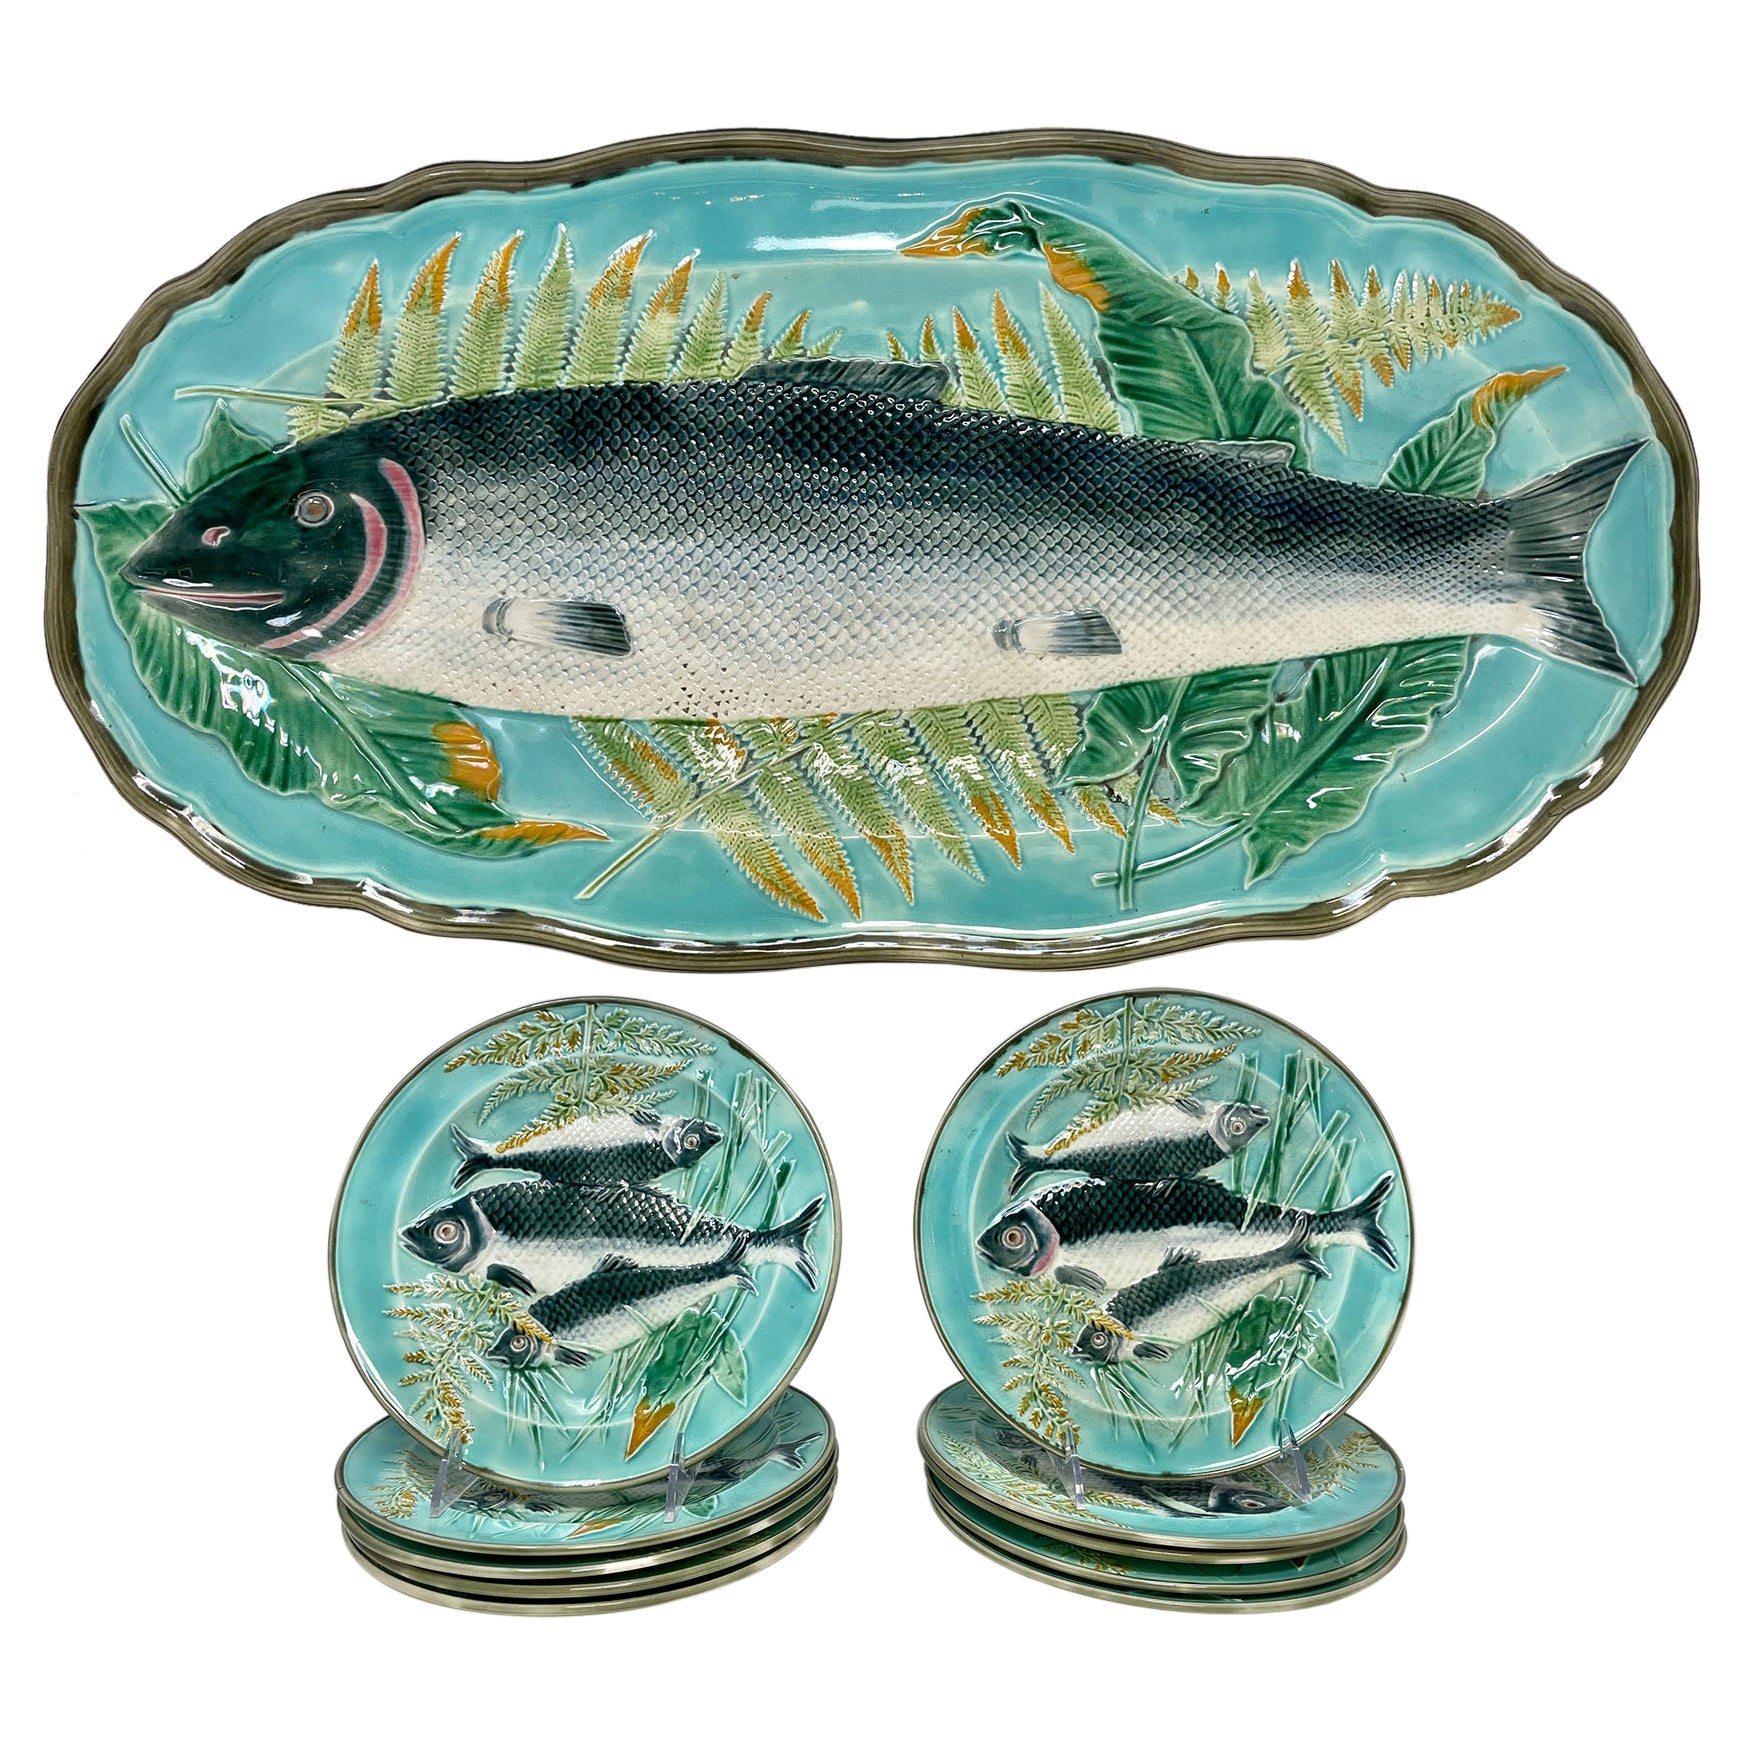 Antique 19th Century English Wedgwood Majolica Fish Set, 1 Platter and 10 Plates